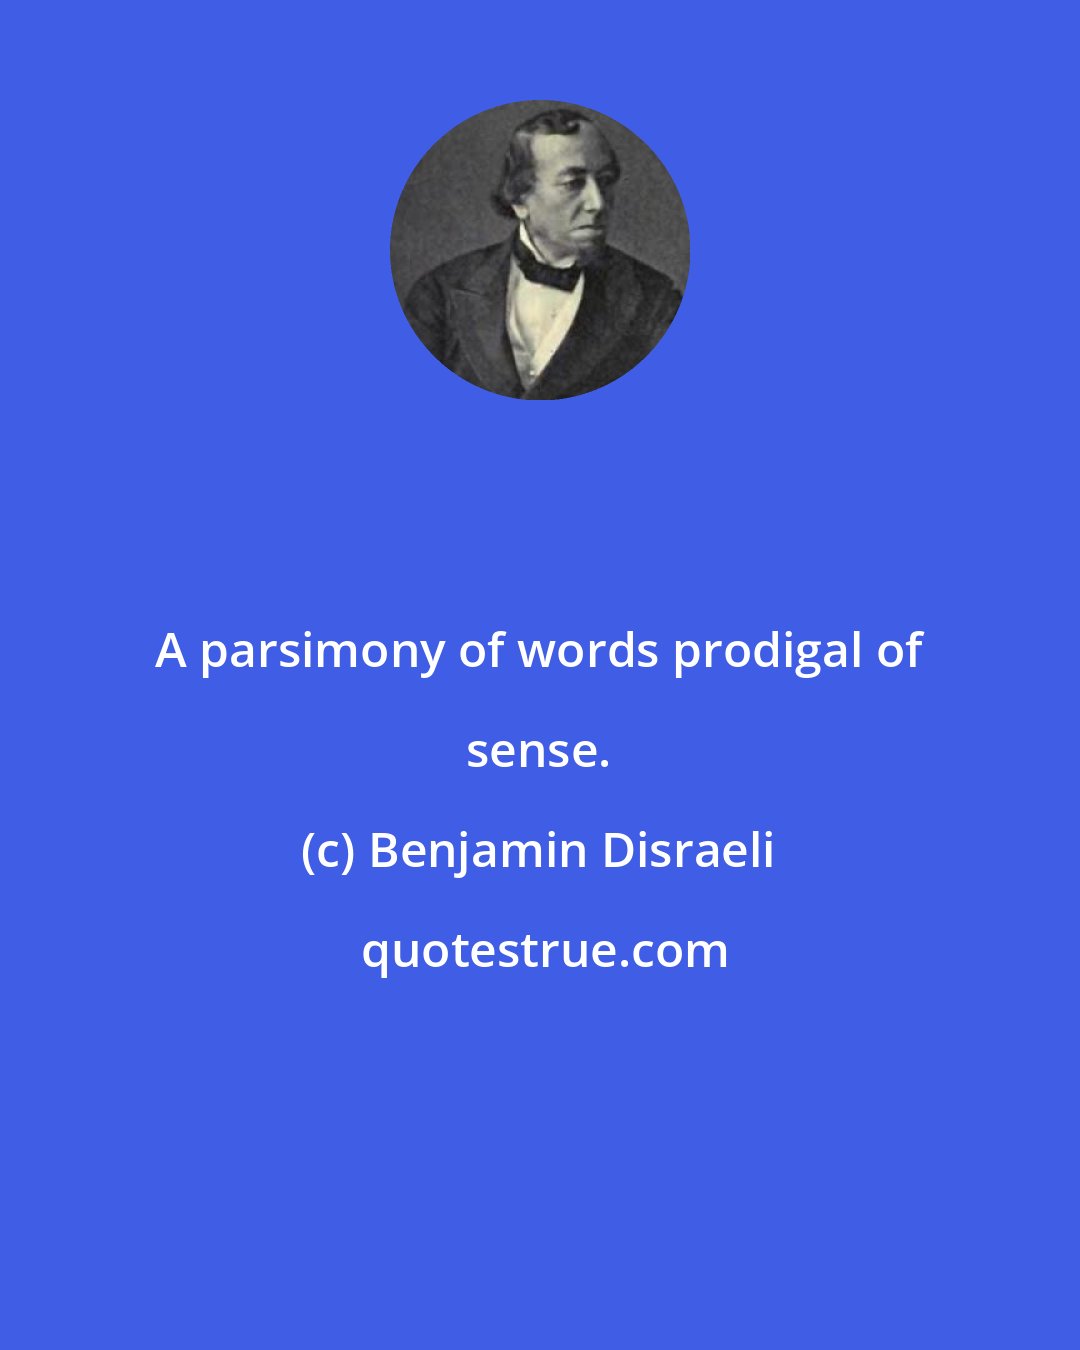 Benjamin Disraeli: A parsimony of words prodigal of sense.